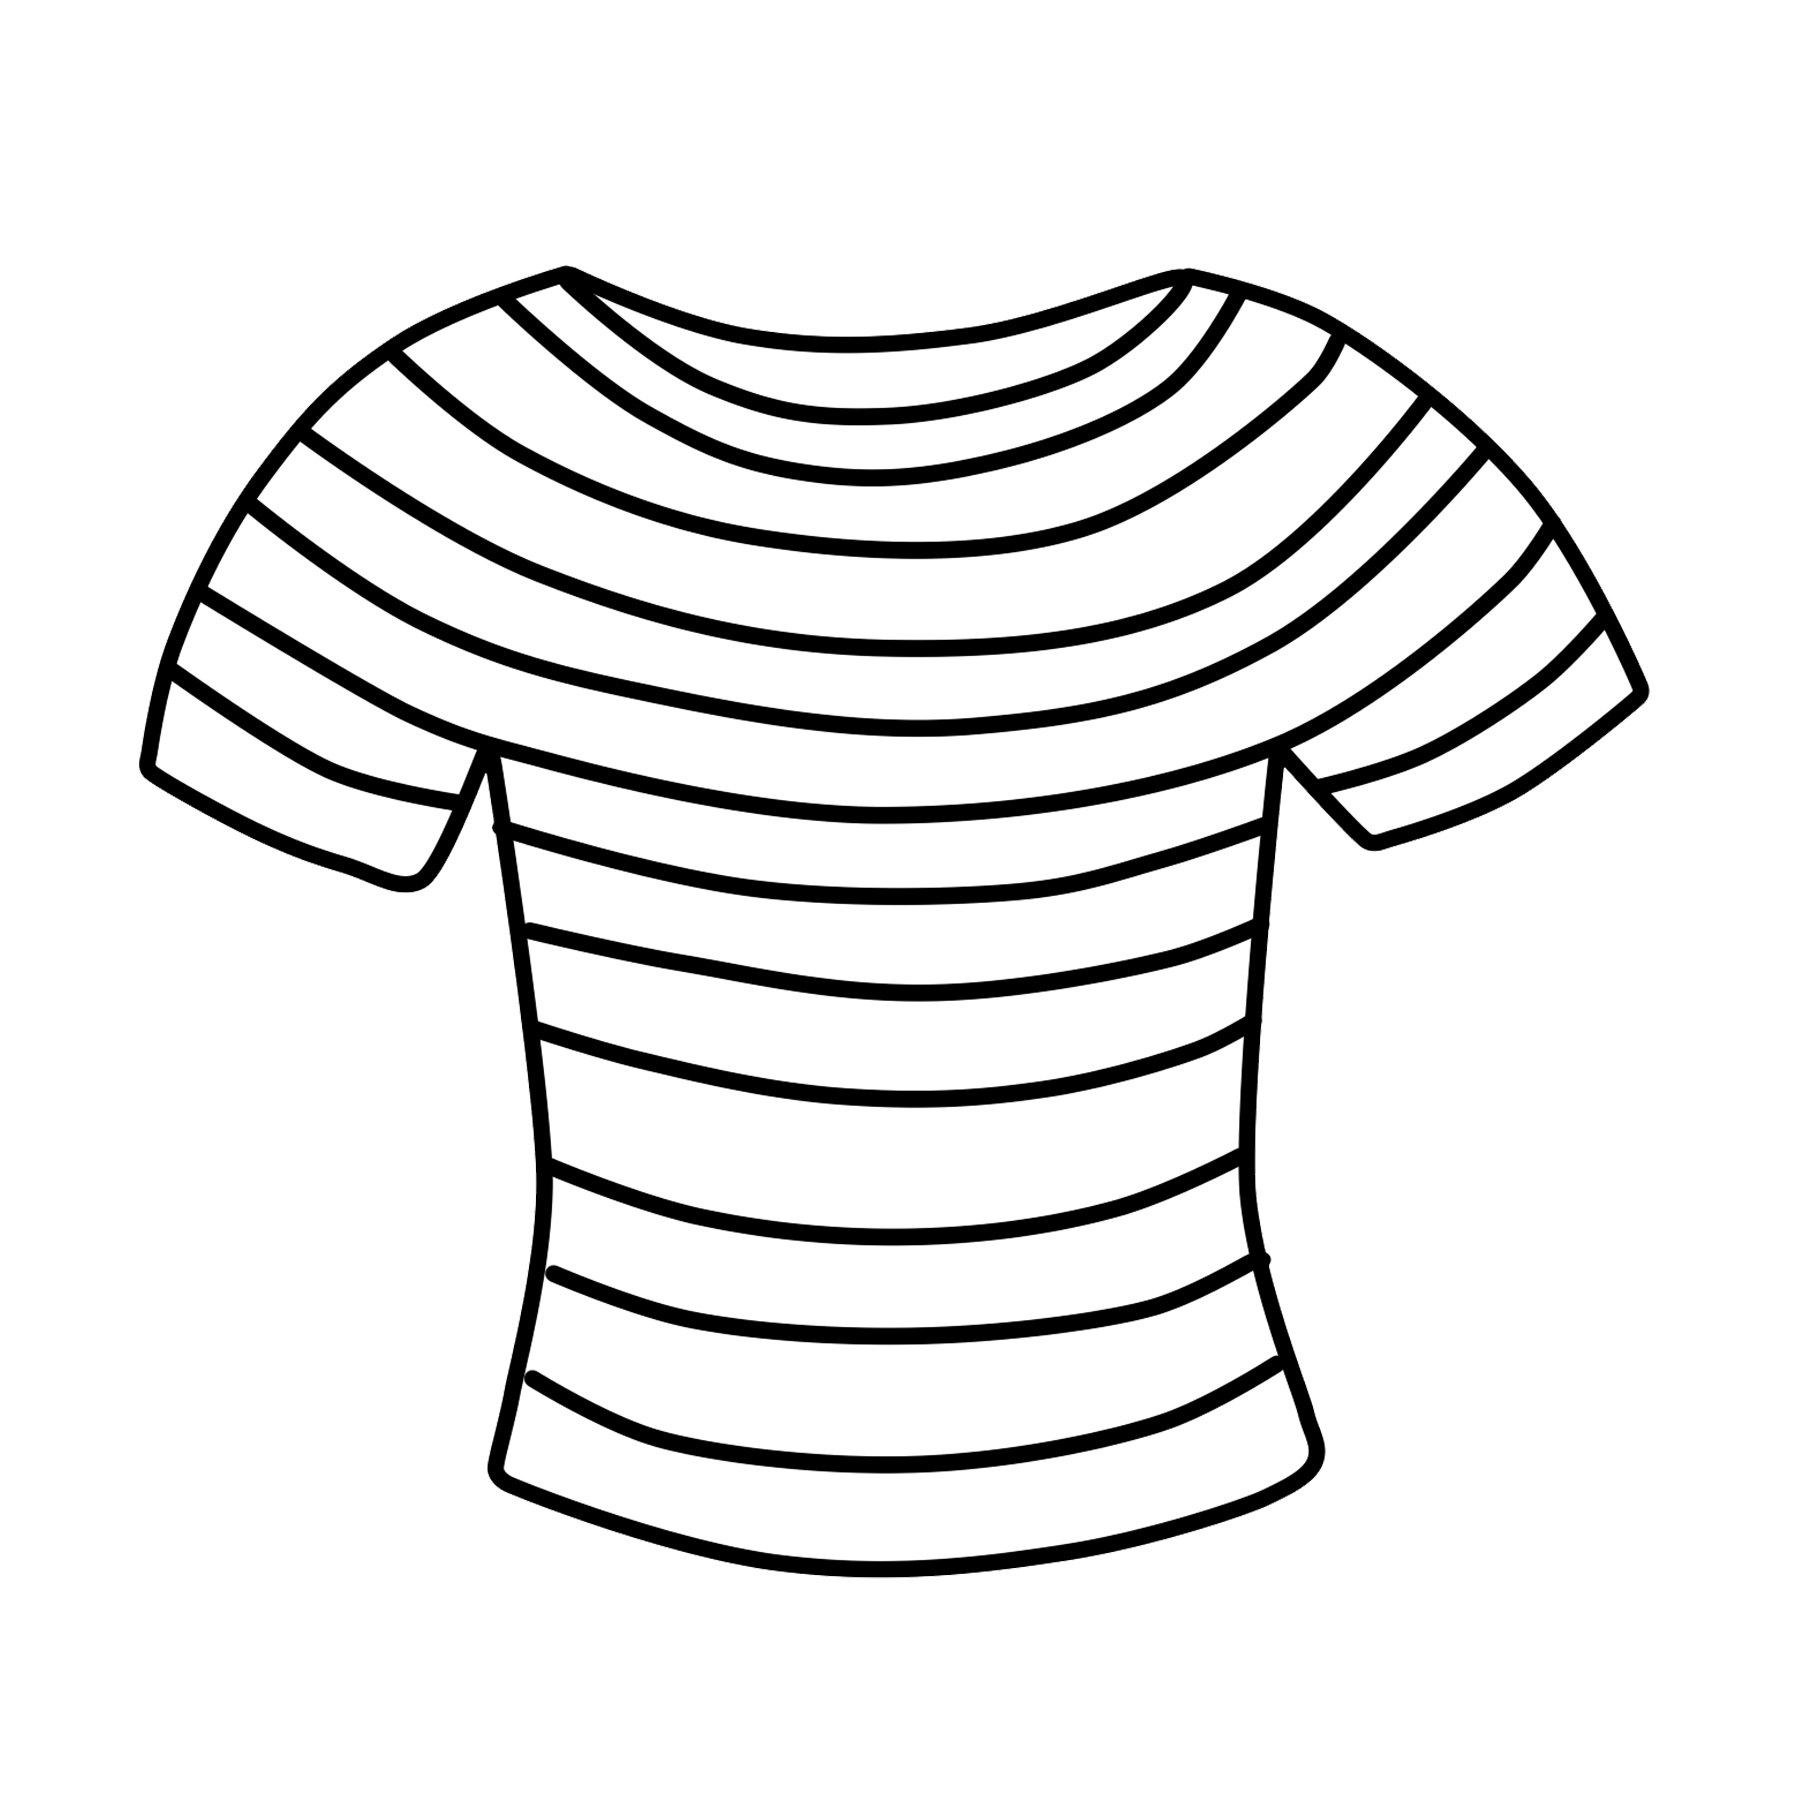 Shirt Shirt Clip Art Designs Free Clipart Images Clip - vrogue.co